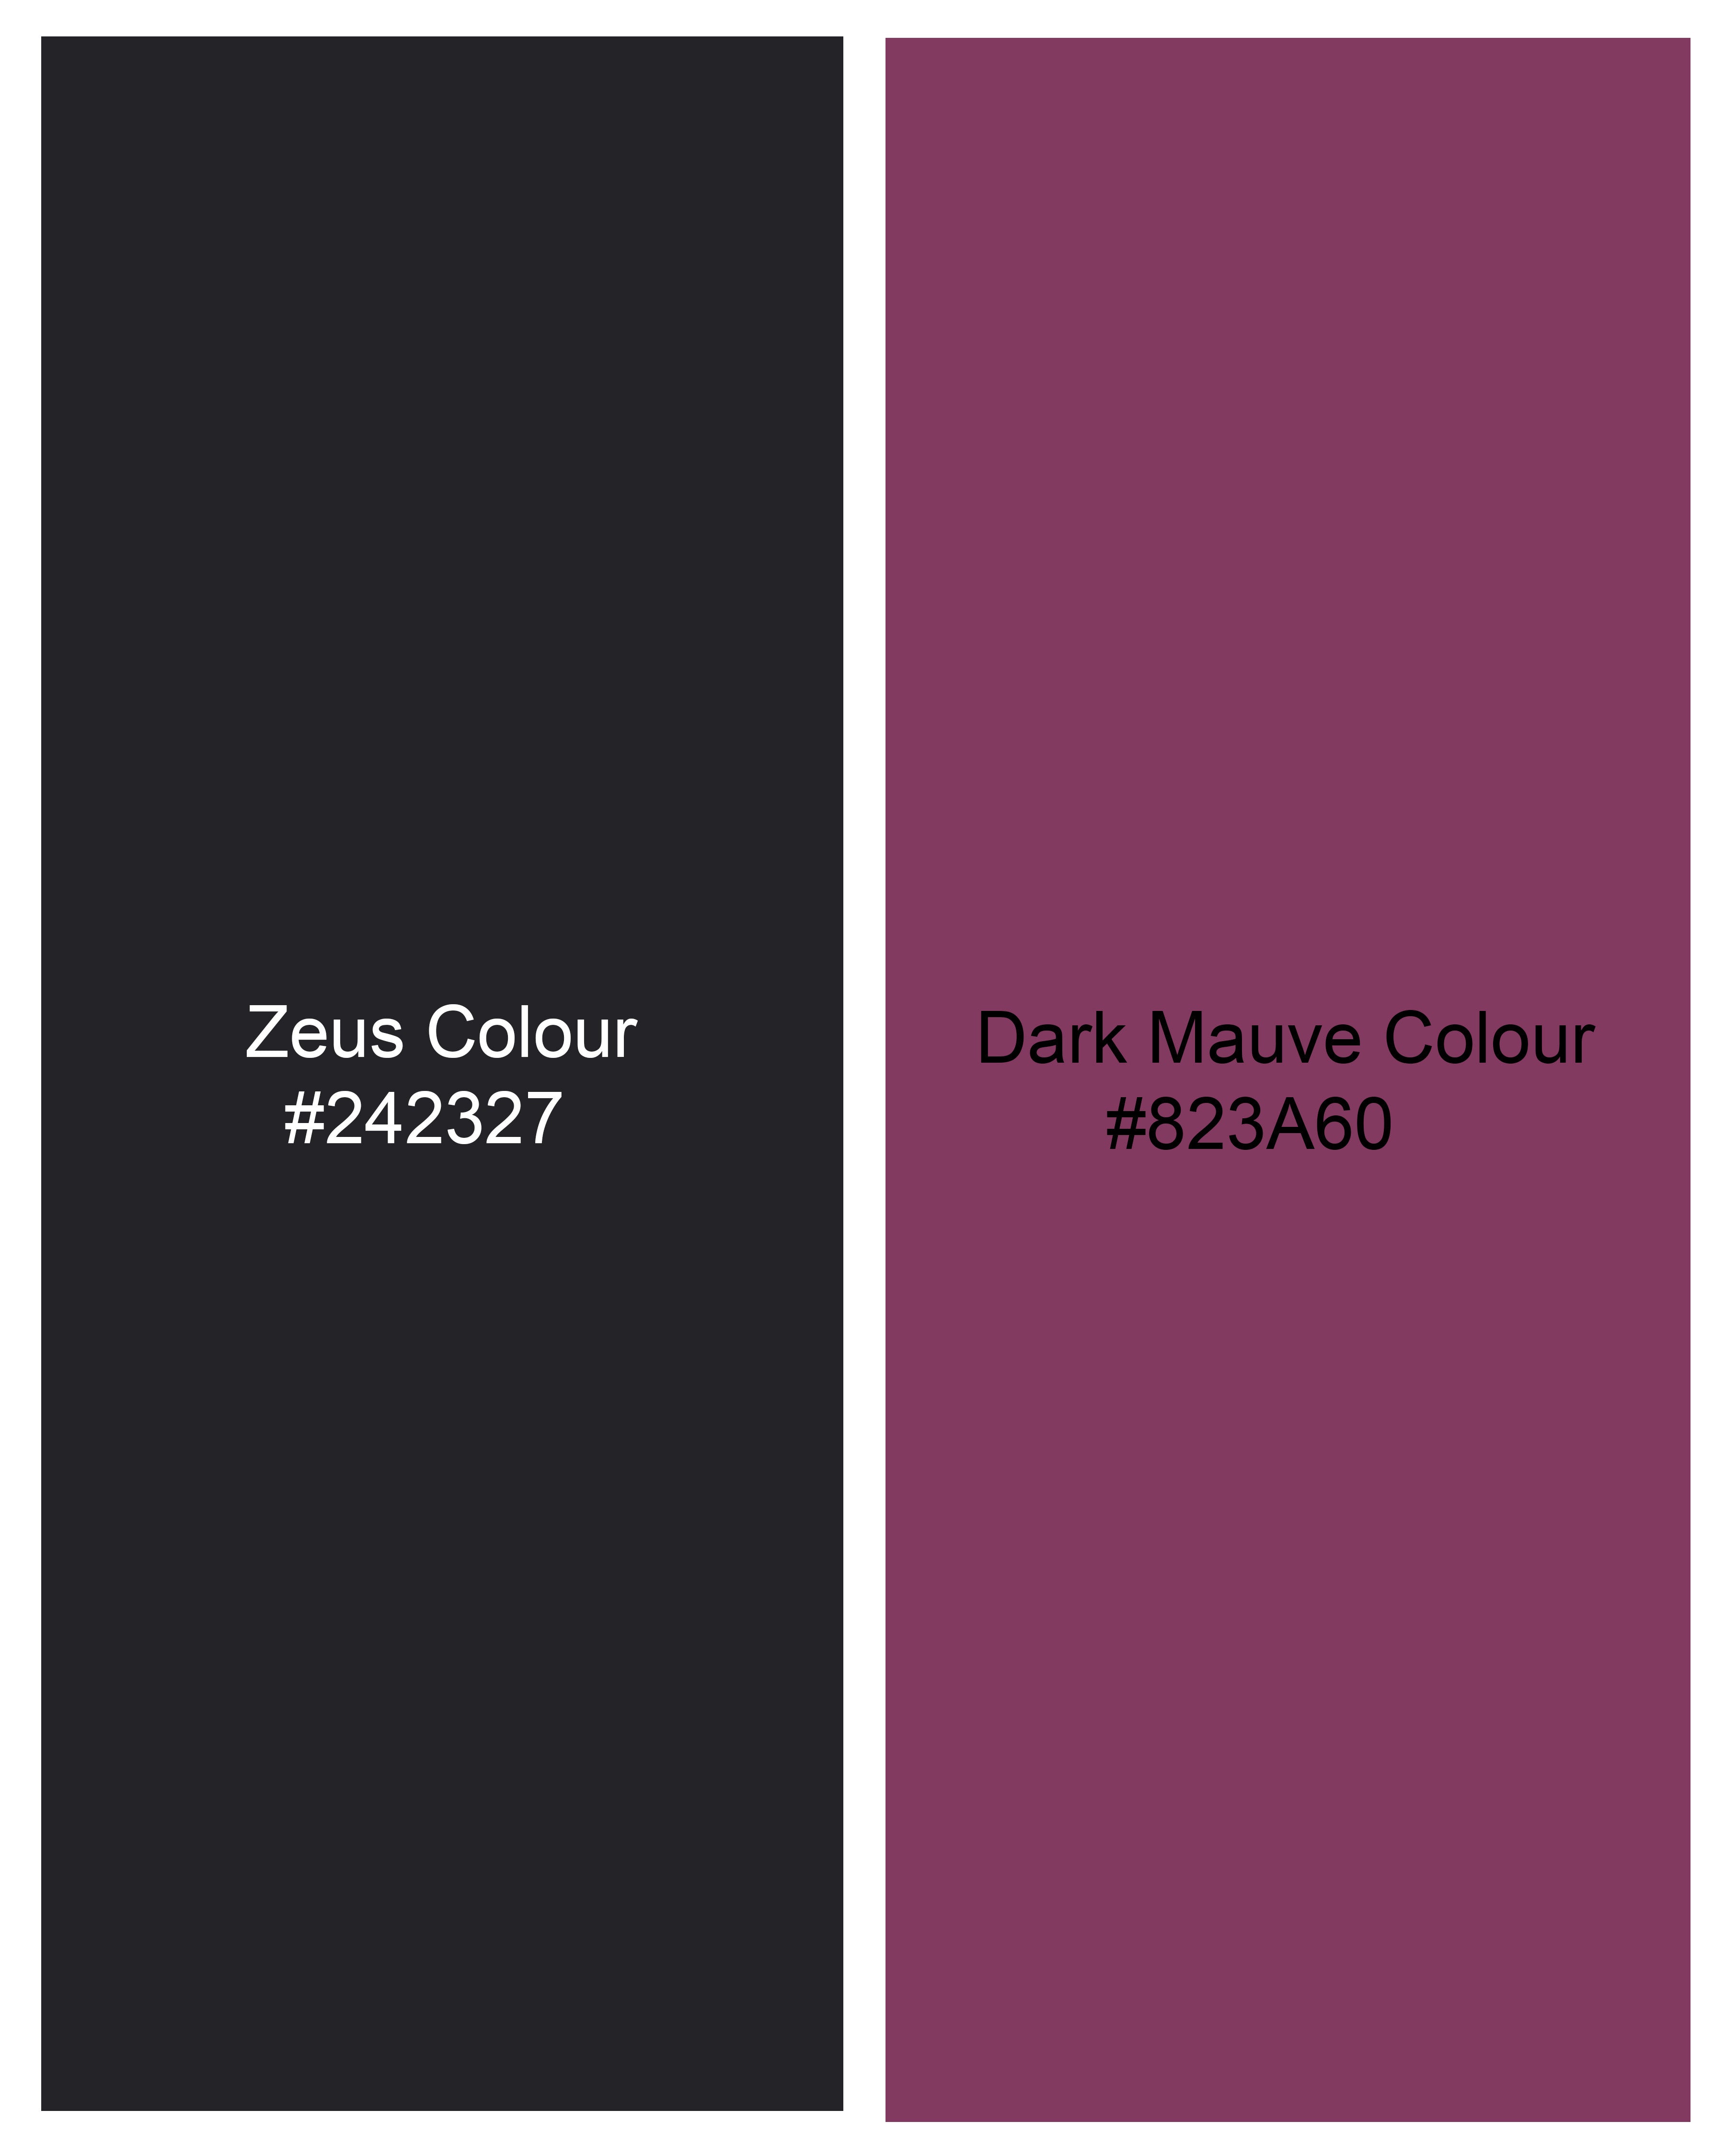 Zeus Black with Dark Mauve Pink Striped Cross-Buttoned Bandhgala Blazer BL2479-CBG-36, BL2479-CBG-38, BL2479-CBG-40, BL2479-CBG-42, BL2479-CBG-44, BL2479-CBG-46, BL2479-CBG-48, BL2479-CBG-50, BL2479-CBG-52, BL2479-CBG-54, BL2479-CBG-56, BL2479-CBG-58, BL2479-CBG-60